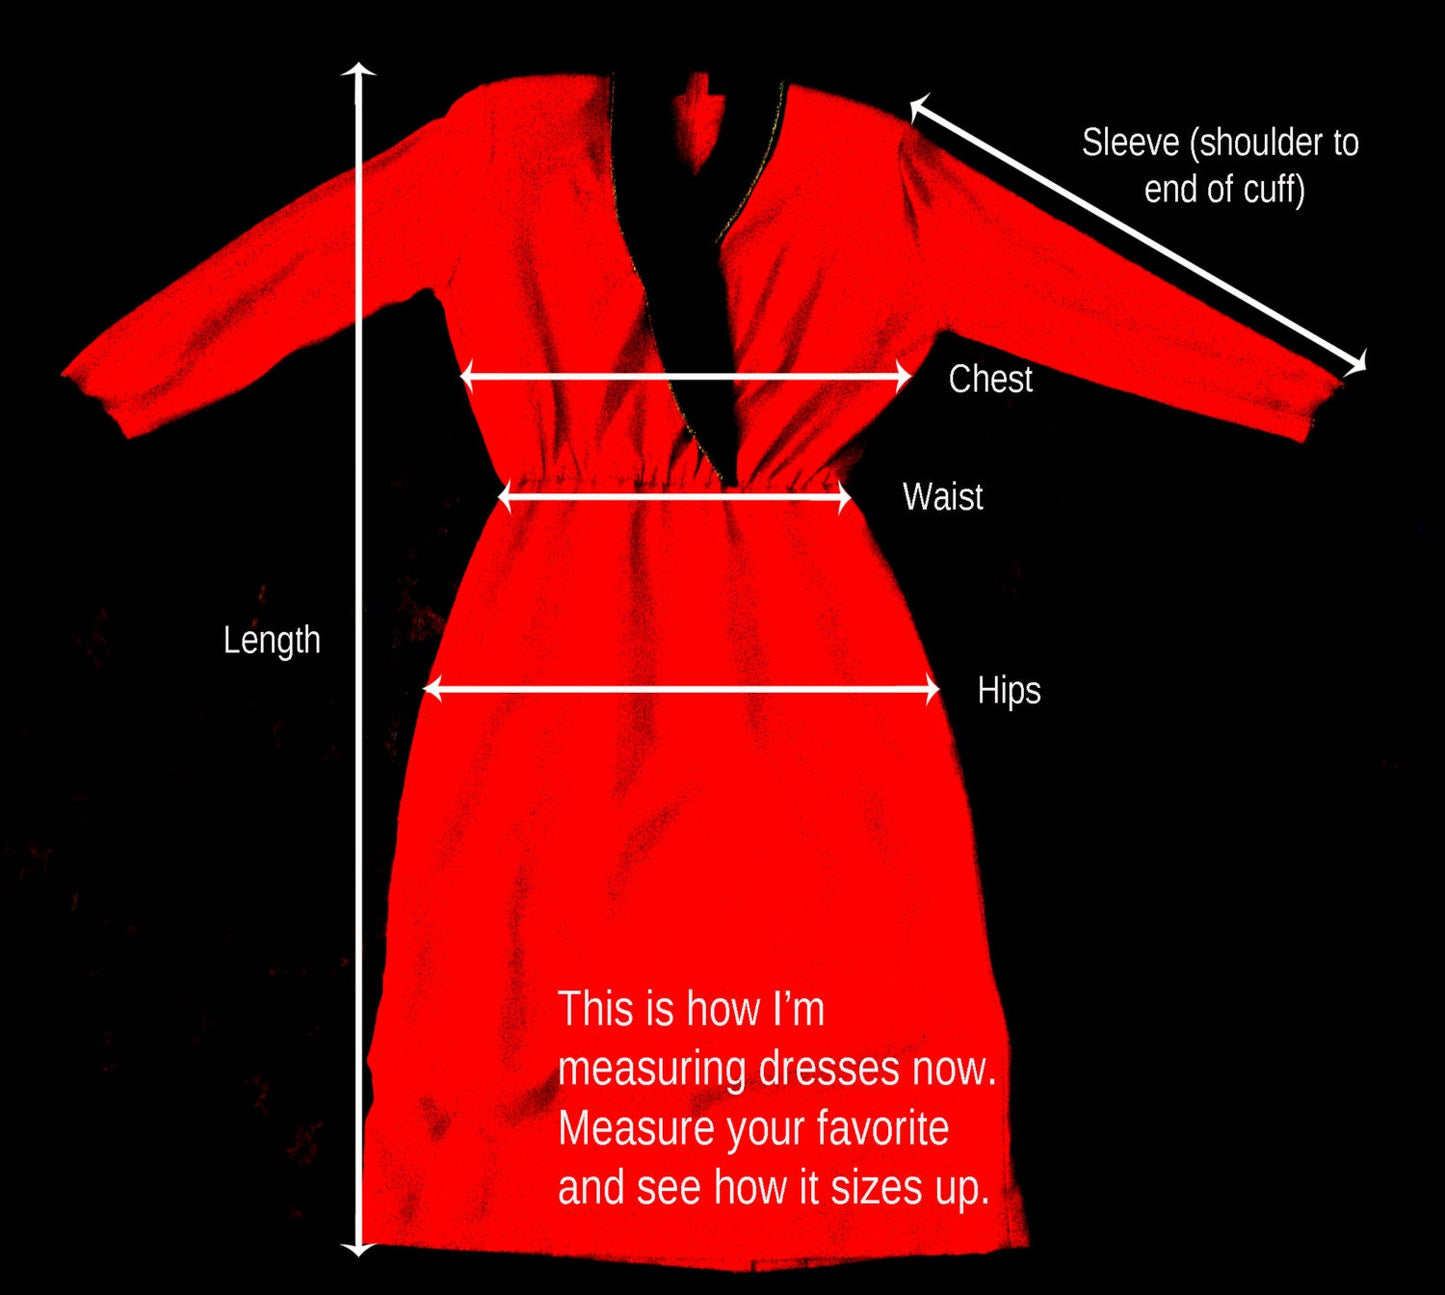 Beautiful Short Sleeve Mod Print Dress by BCBG